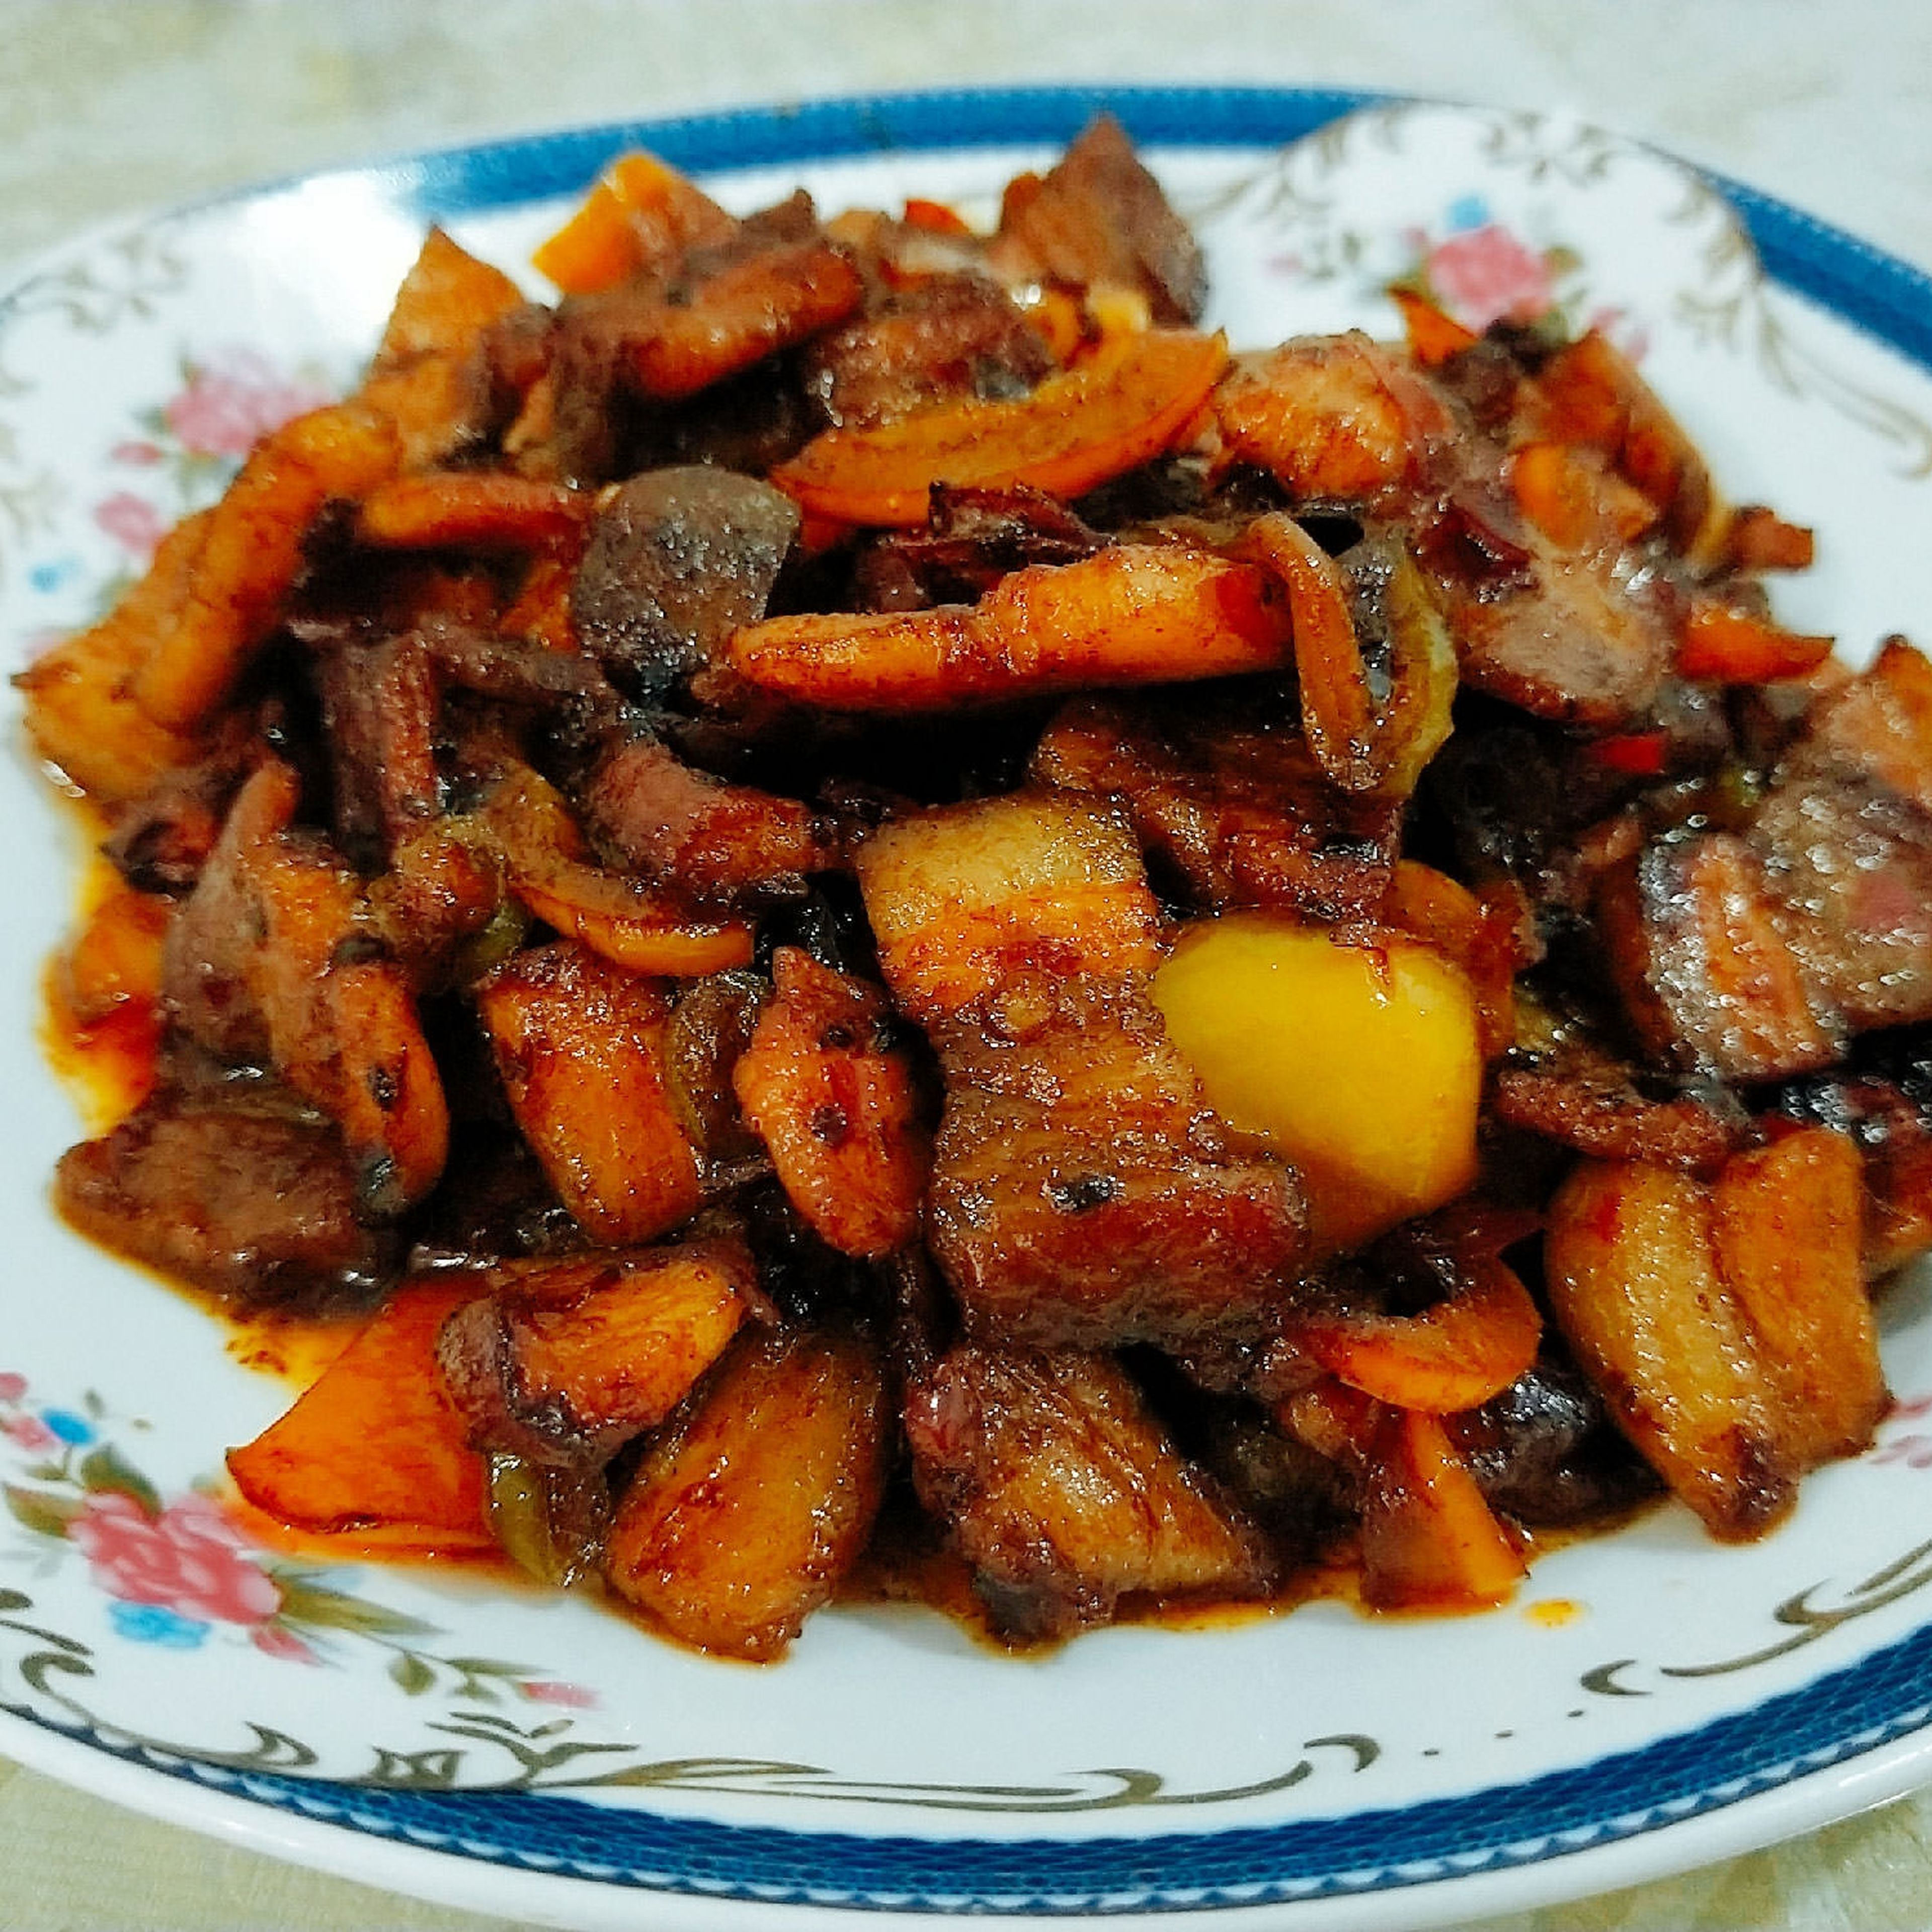 Sichuan-style crispy pork belly